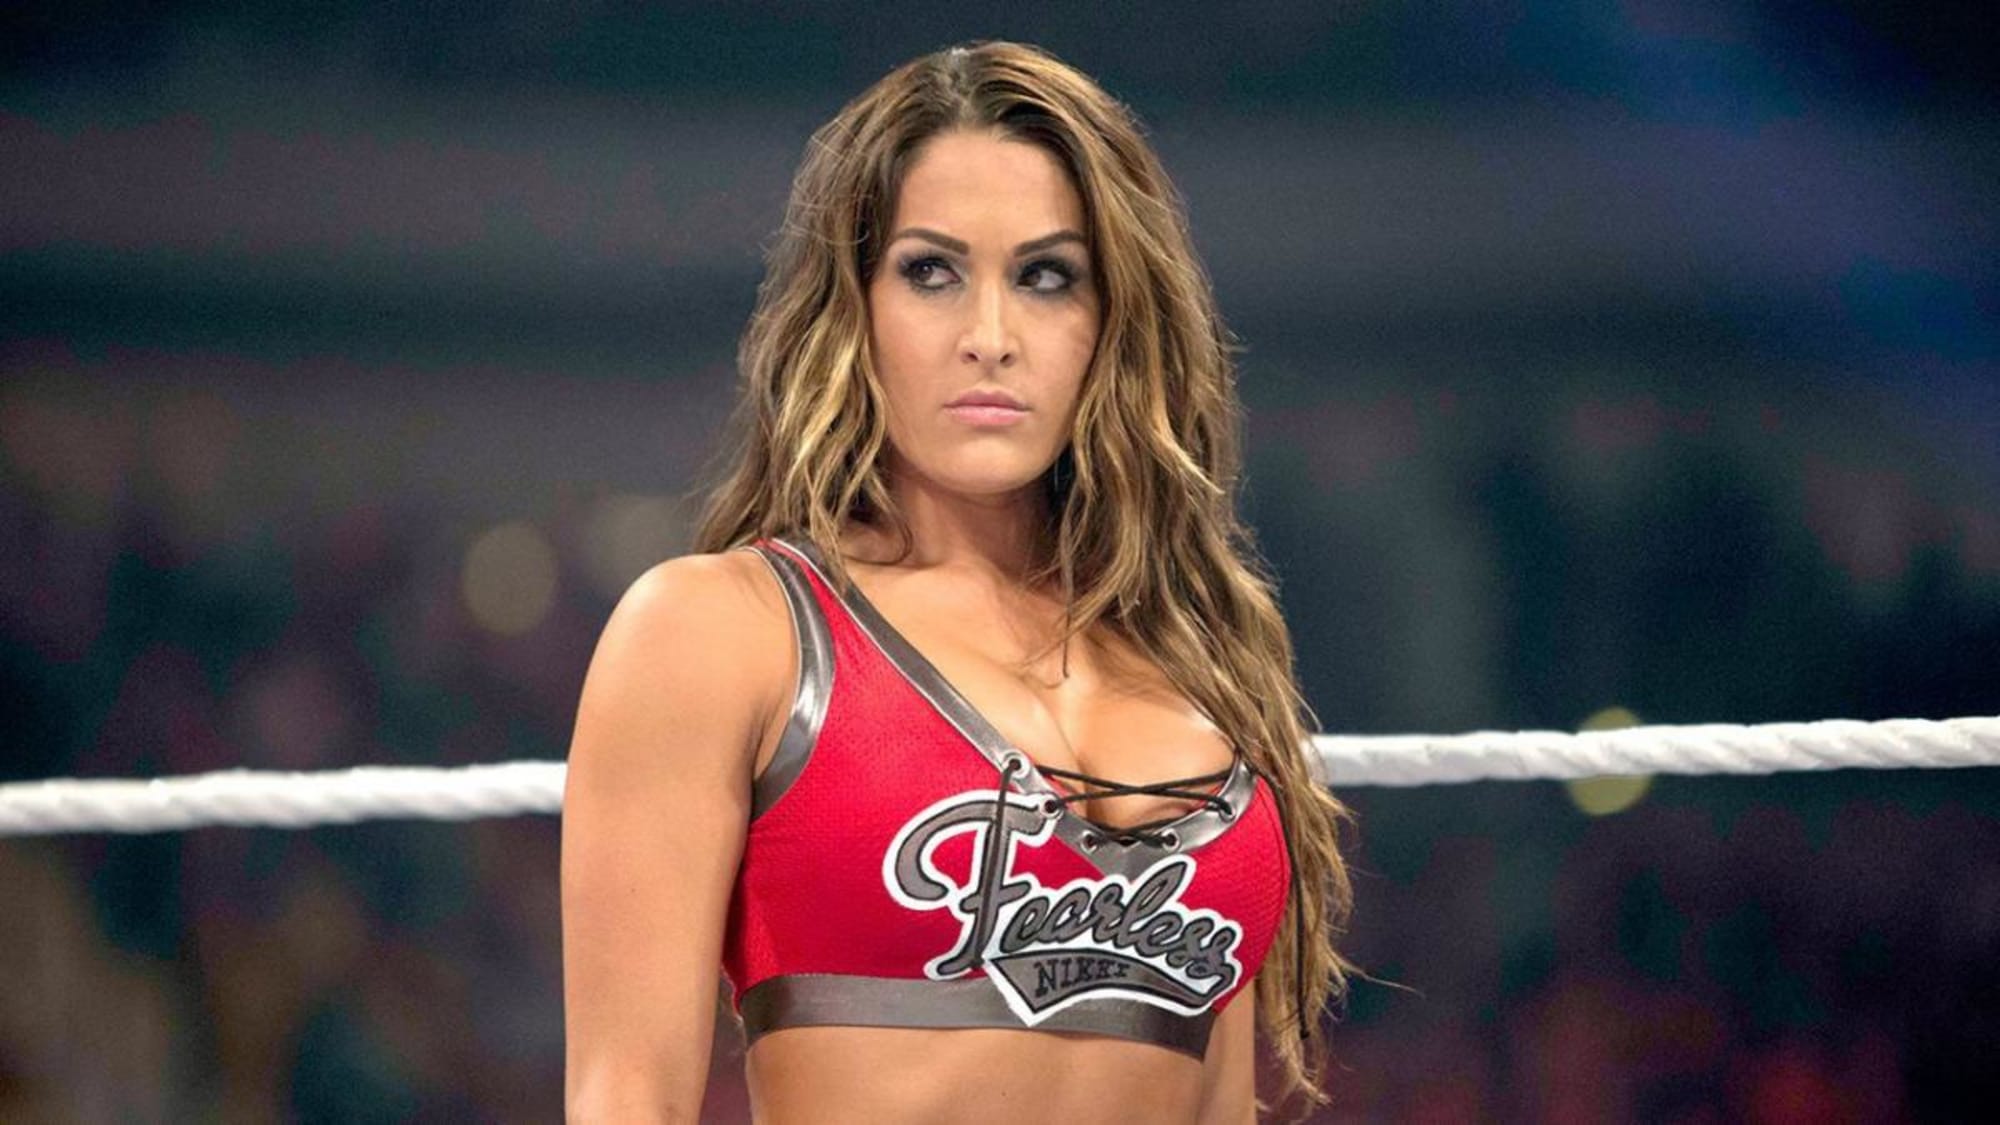 Nikki Bella was vital to the Women's Revolution in spite of WWE